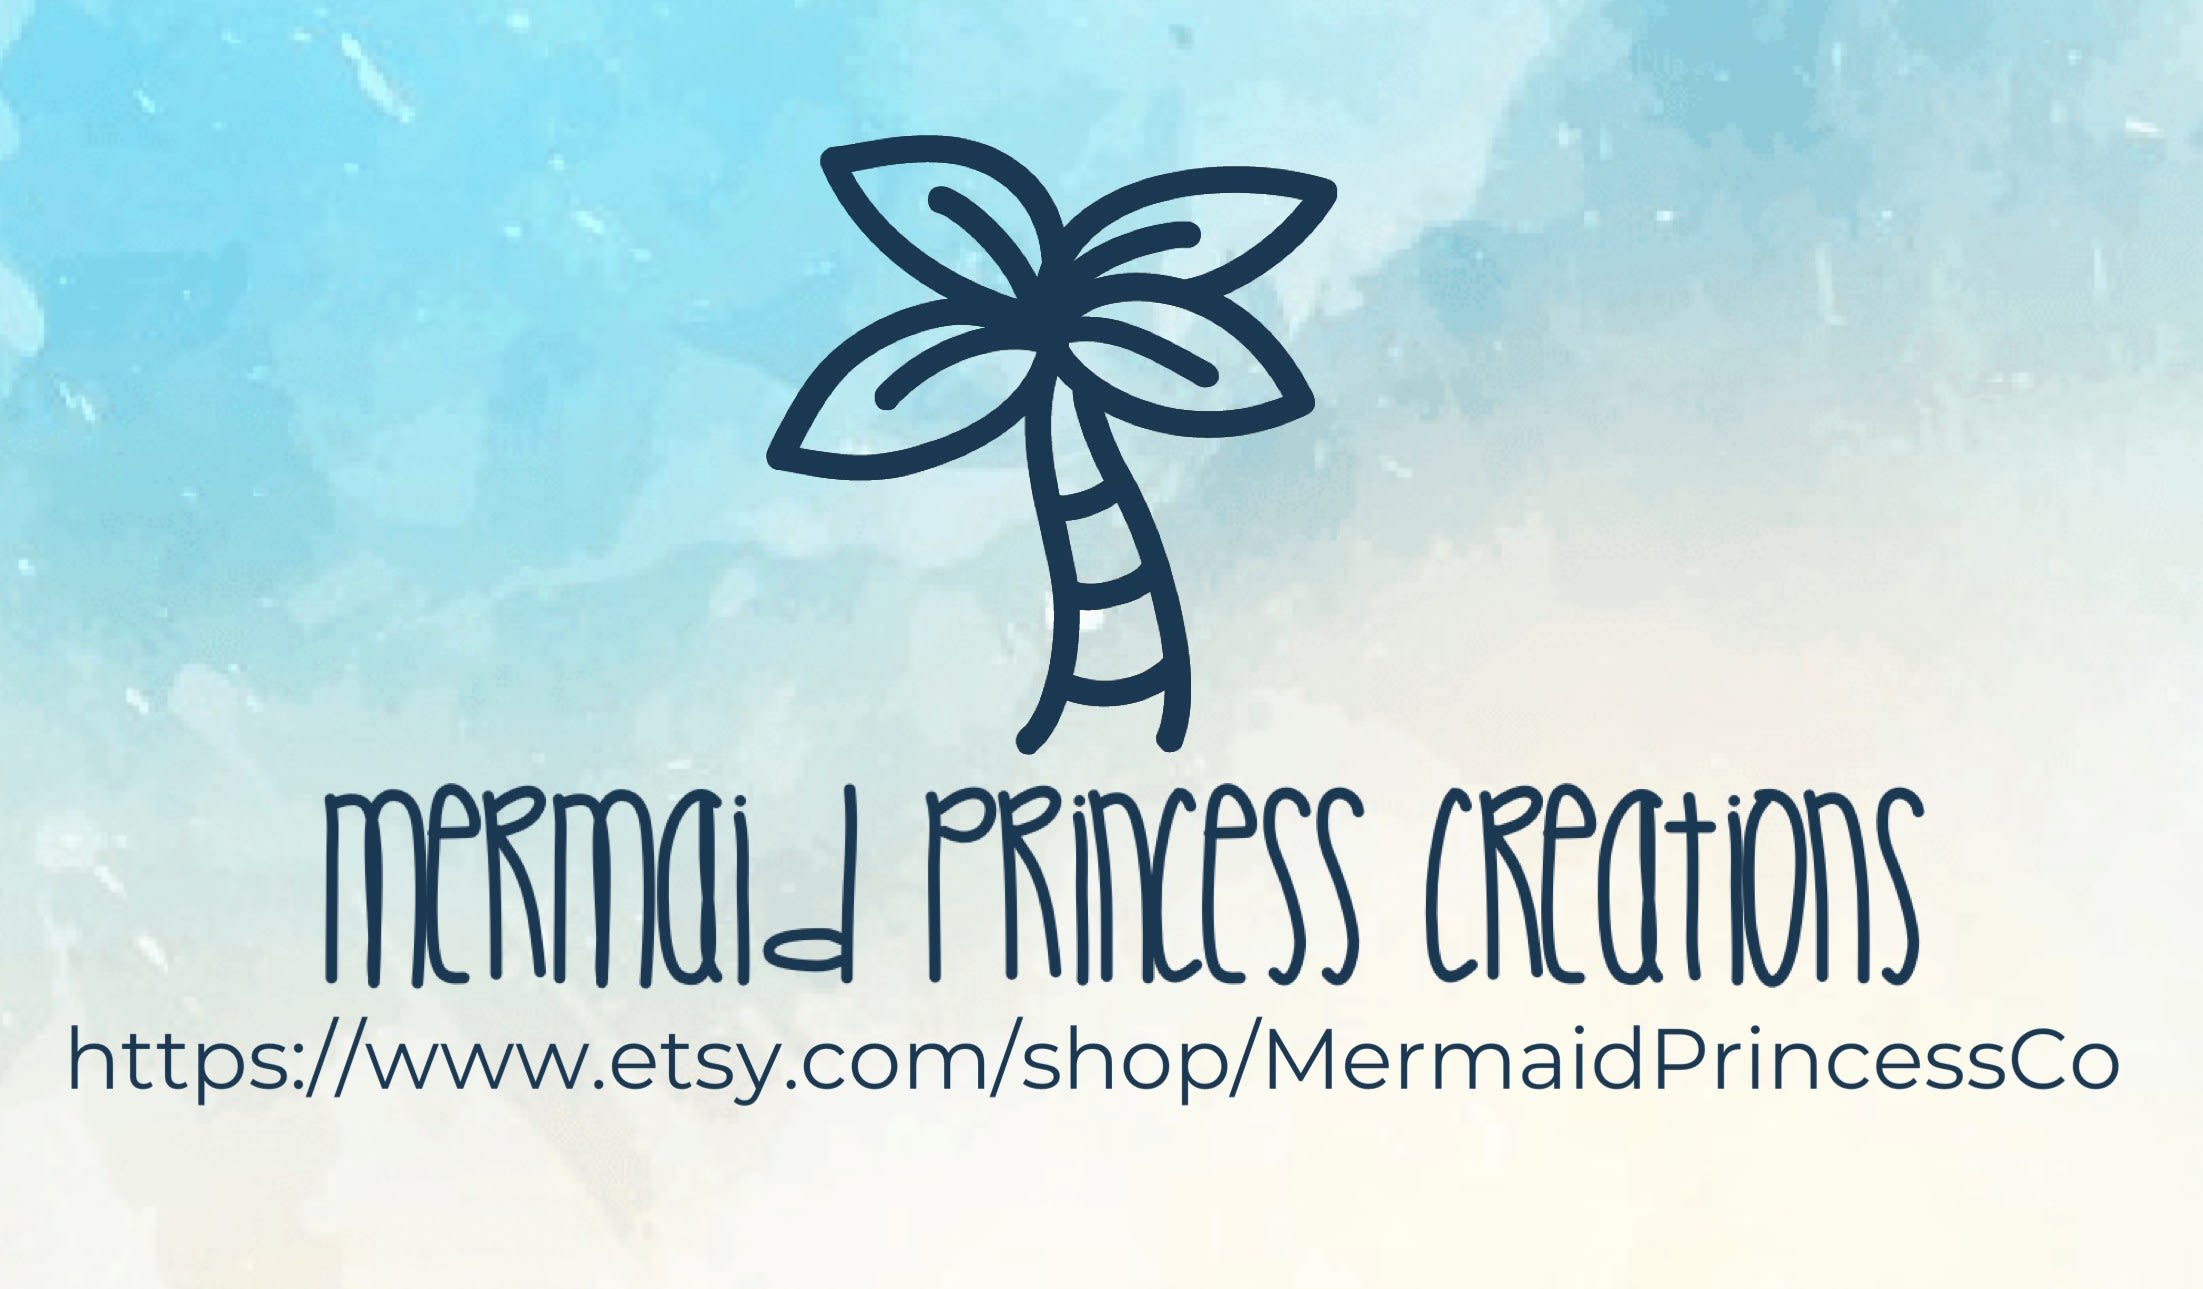 Mermaid Princess Creations